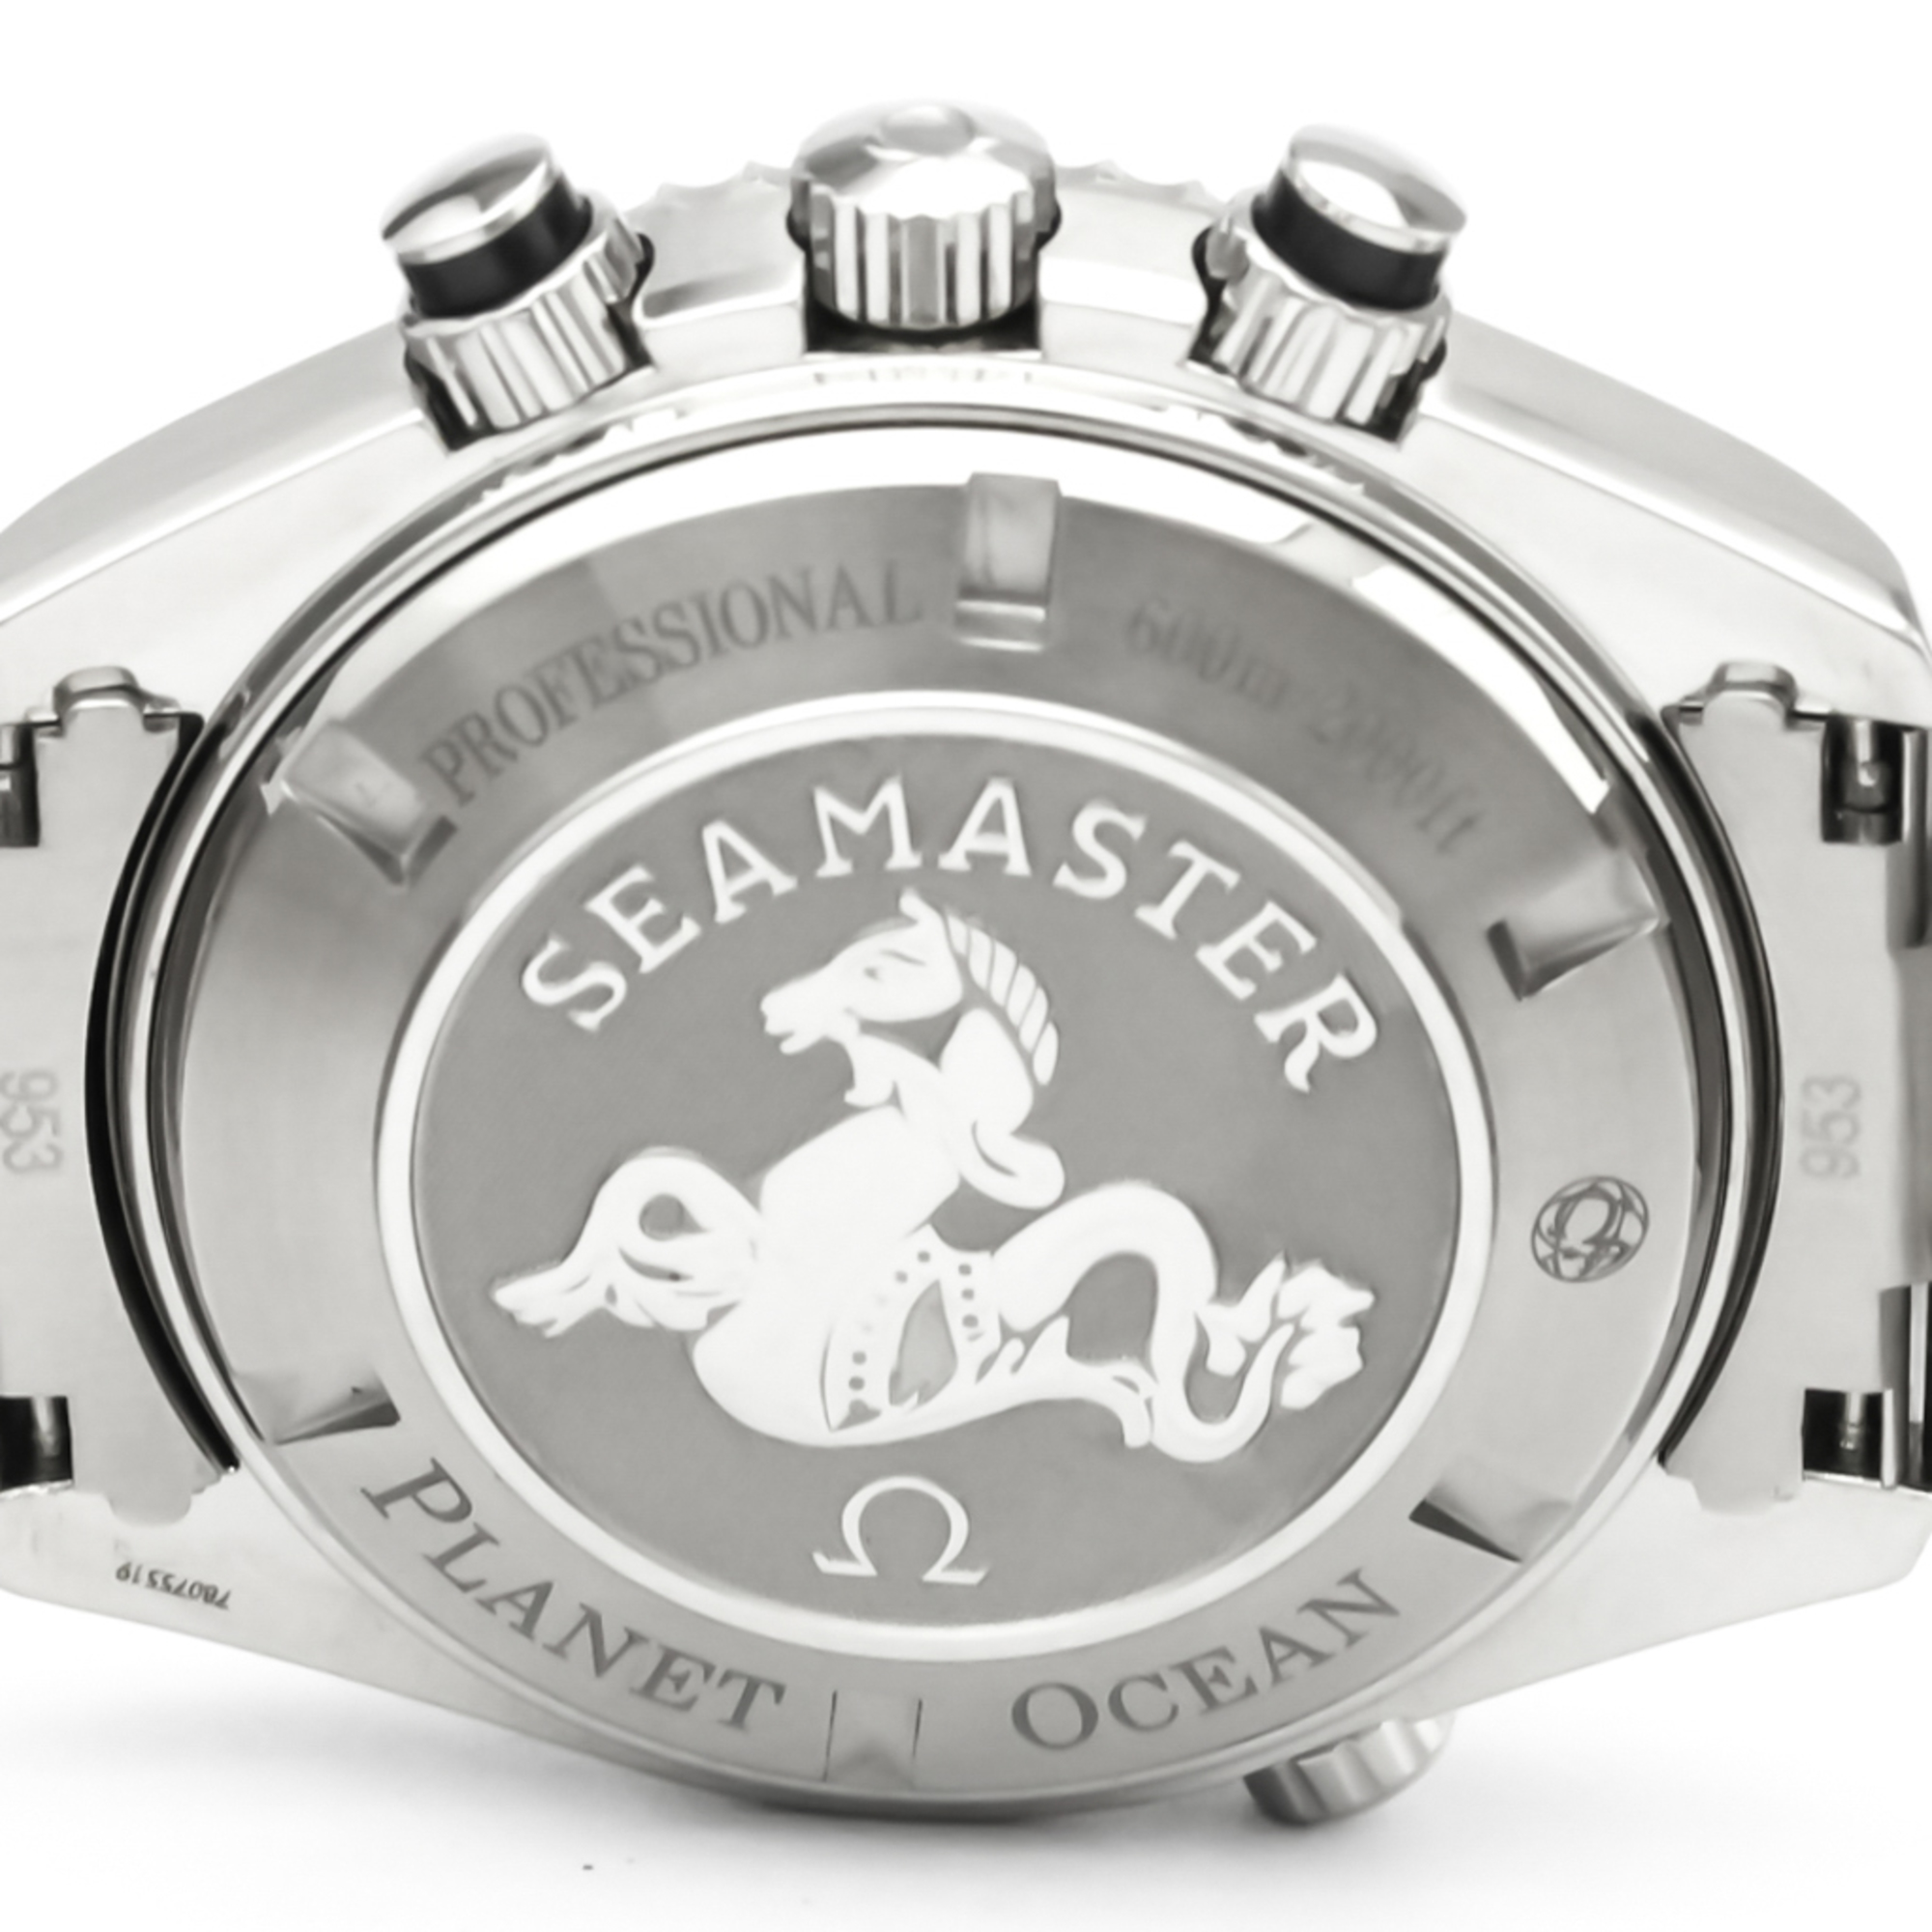 OMEGA Seamaster Planet Ocean 600M Chronograph Watch 2210.51